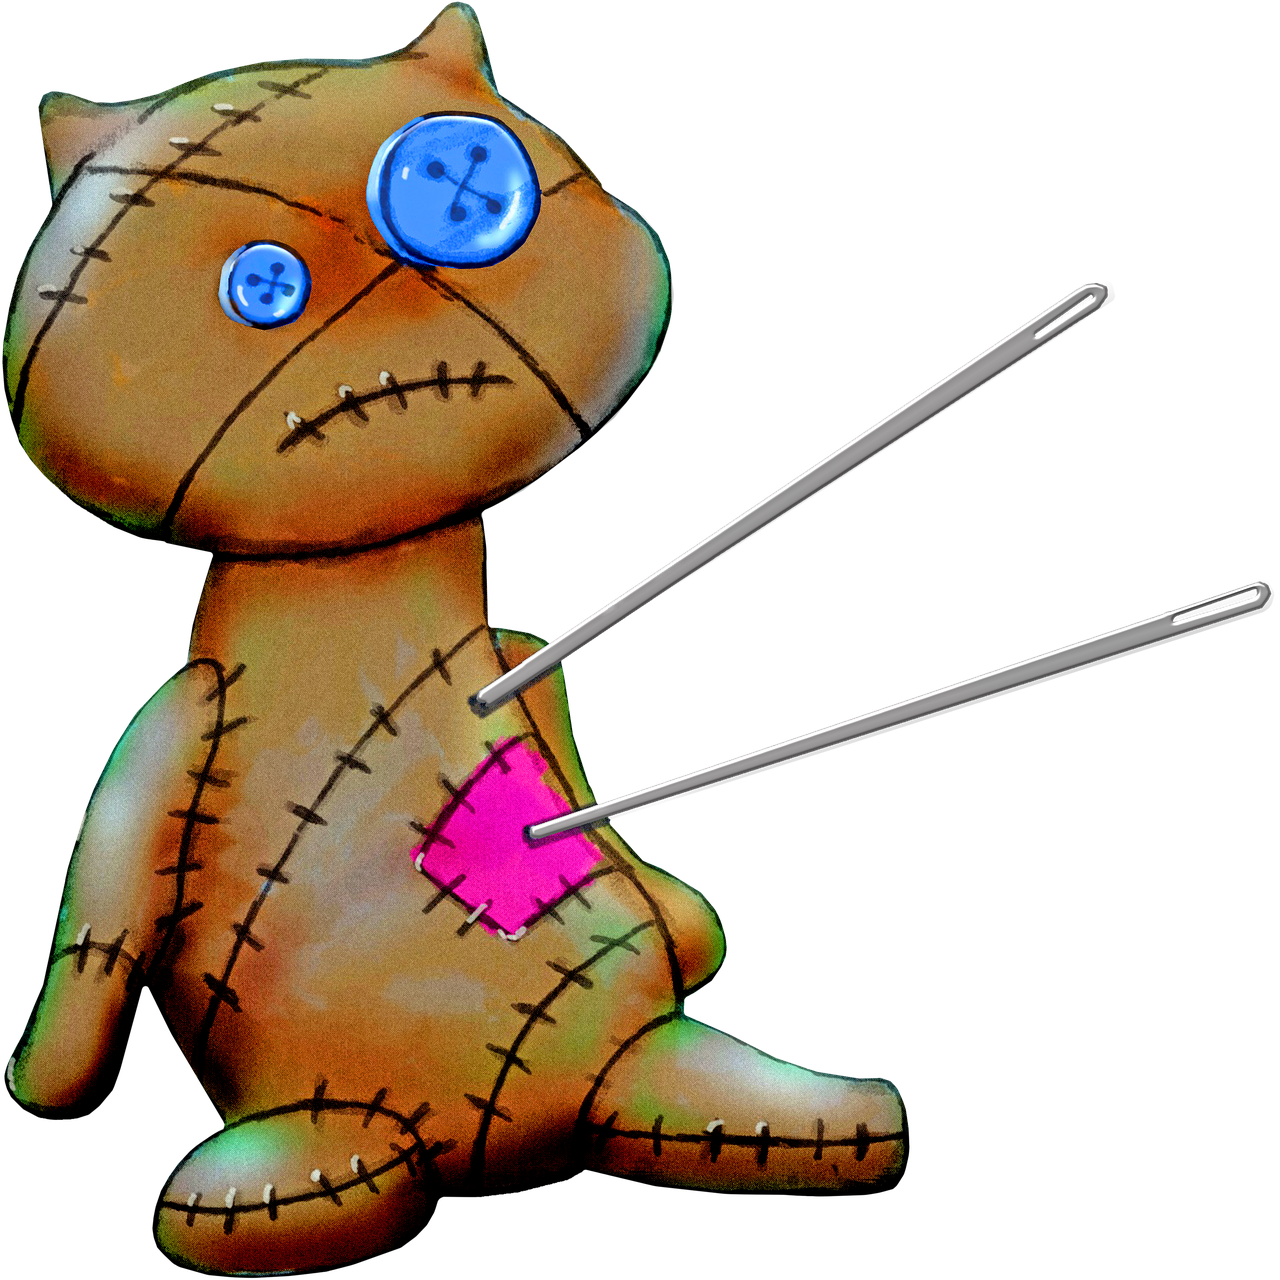 a close up of a stuffed animal with needles, deviantart, digital art, an alien robot naughty nurse, chucky style, 2007 blog, chibi